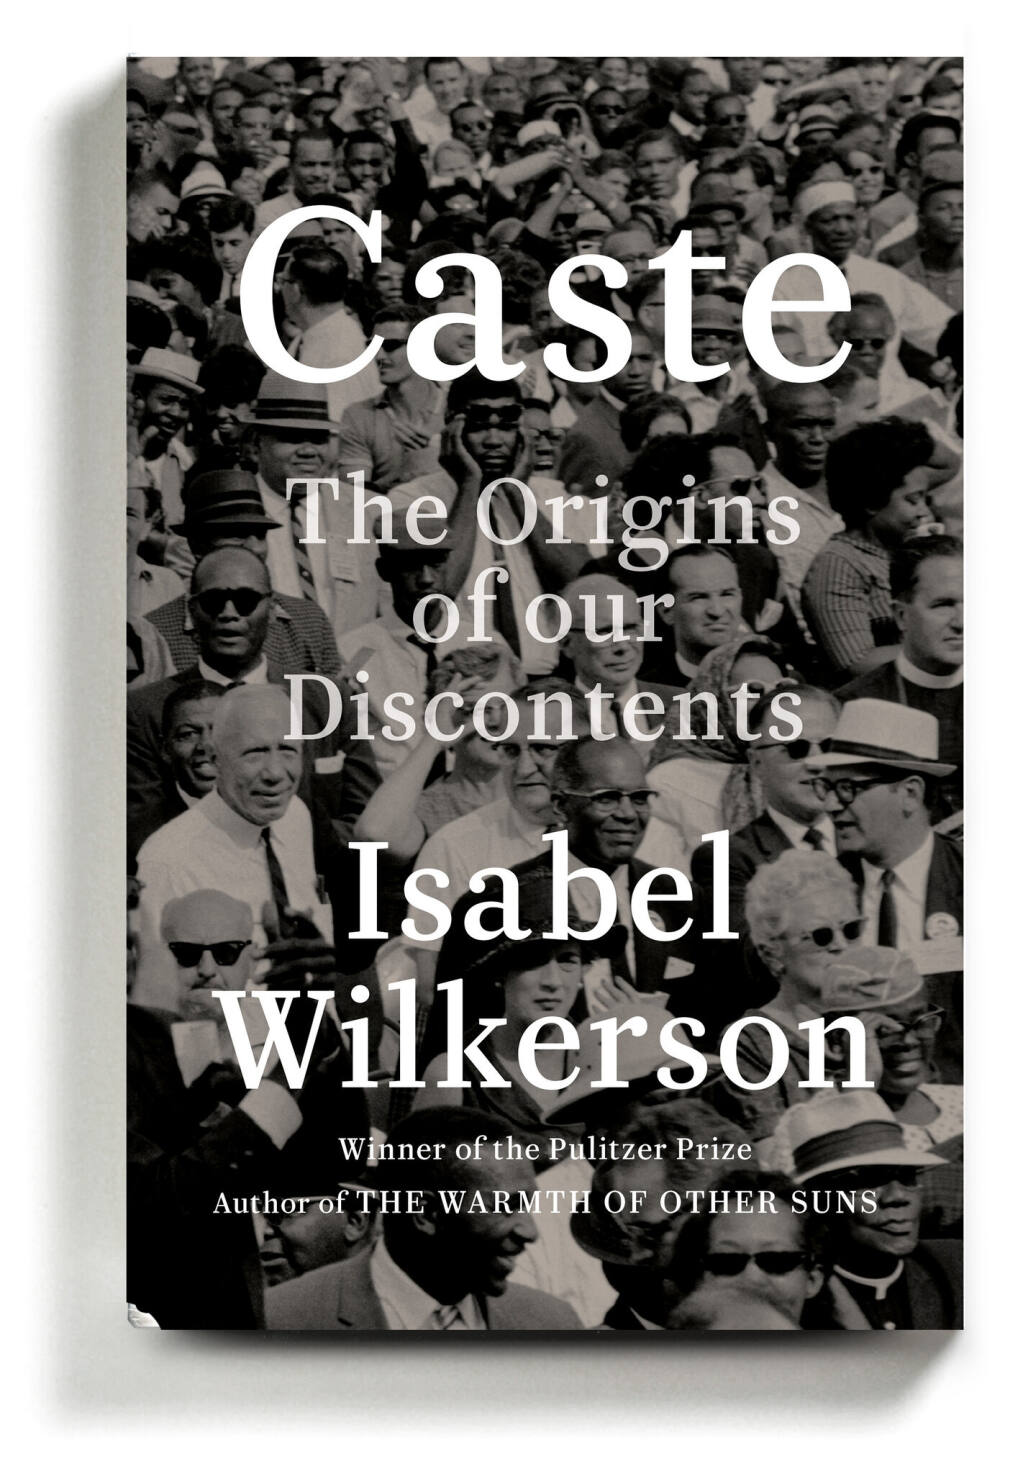 Isabel Wilkerson’s “Caste” is the no. 1 bestselling book in Petaluma this week (RANDOM HOUSE).